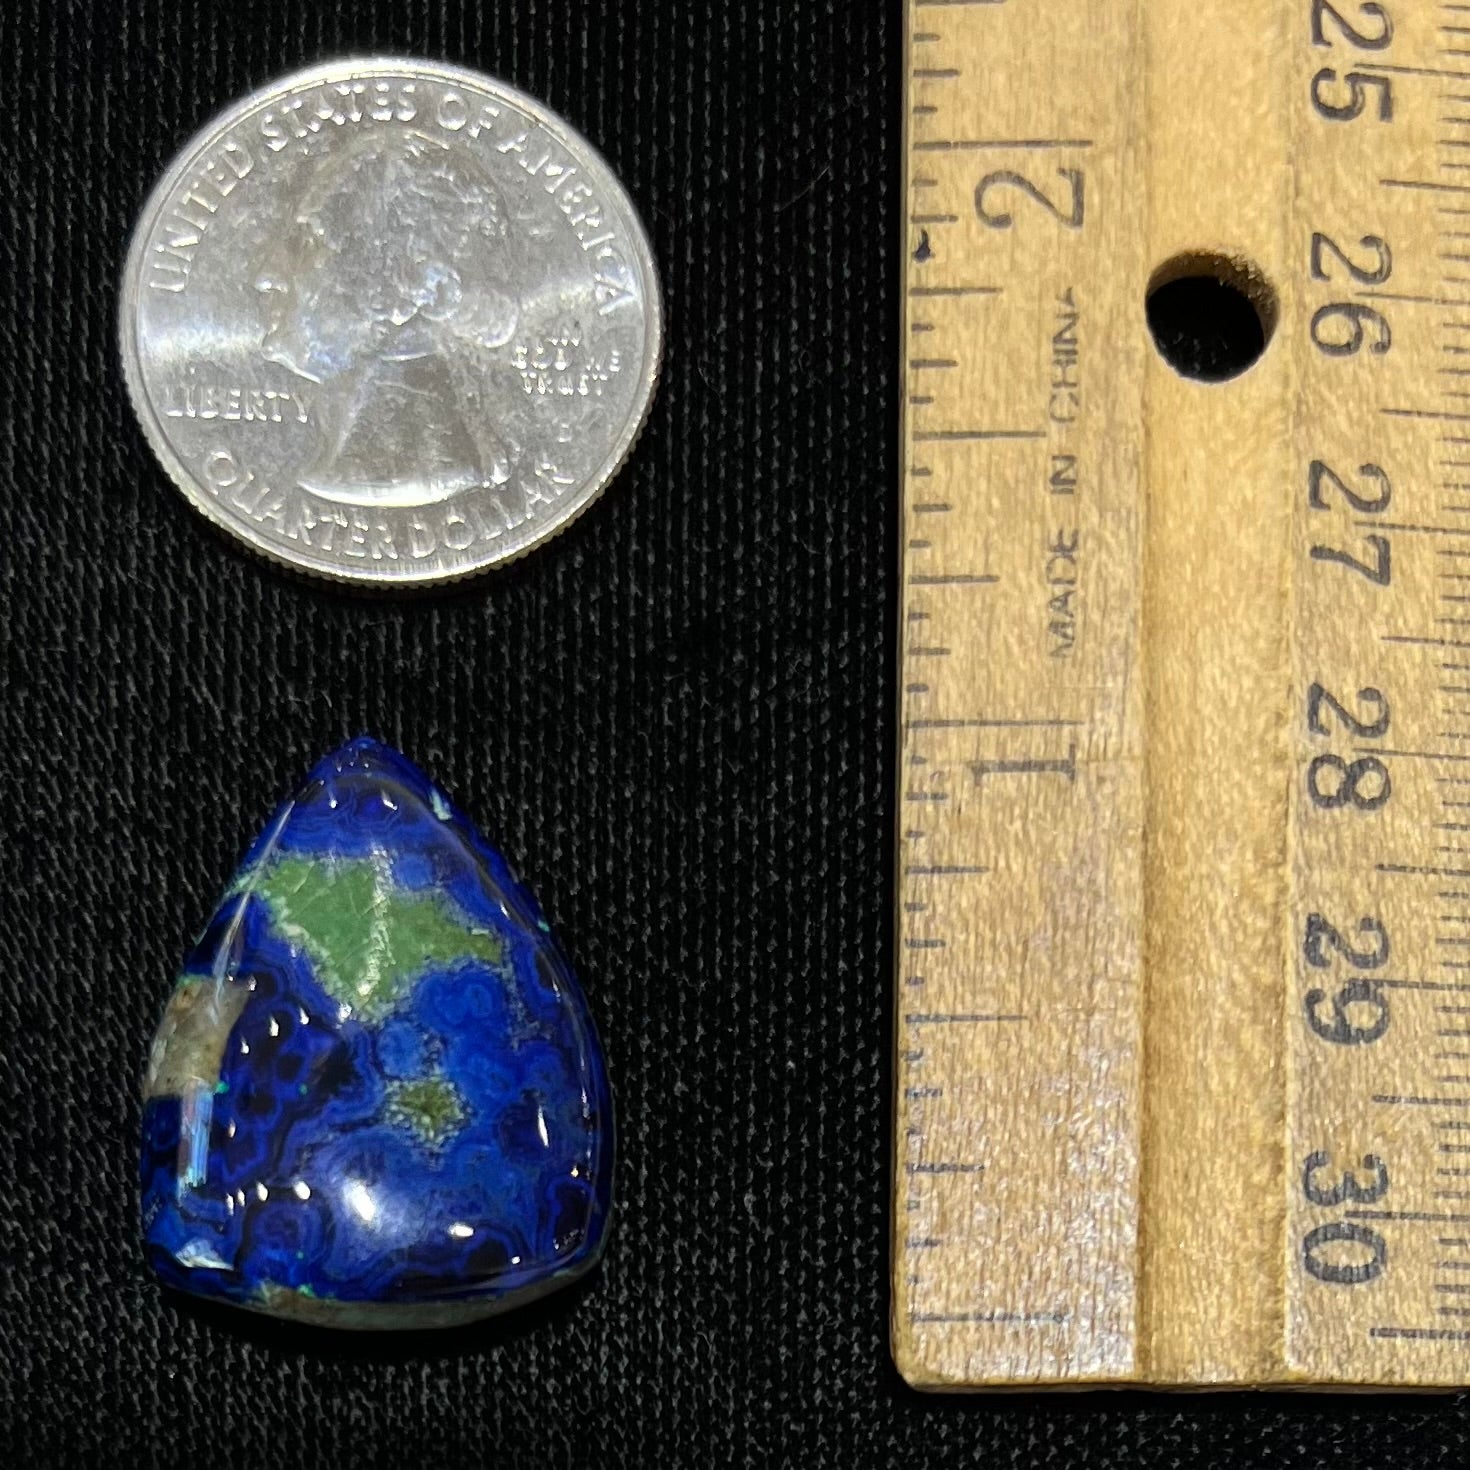 A loose pear shape cabochon cut blue azurite stone with green pseudomalachite inclusions.